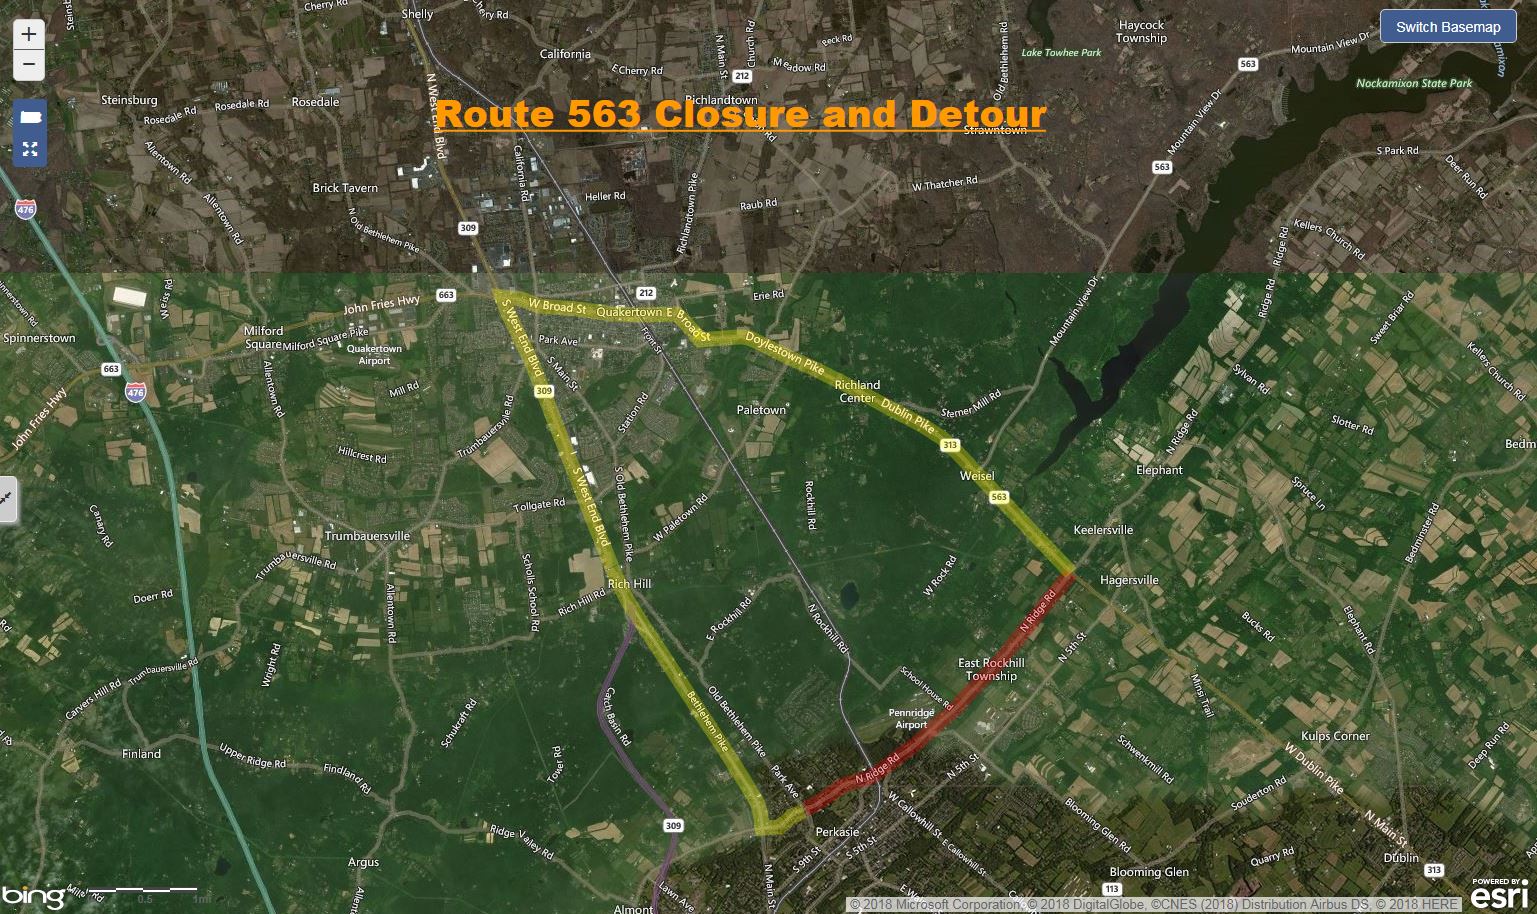 Route 563 Closure and Detour Bucks County.JPG